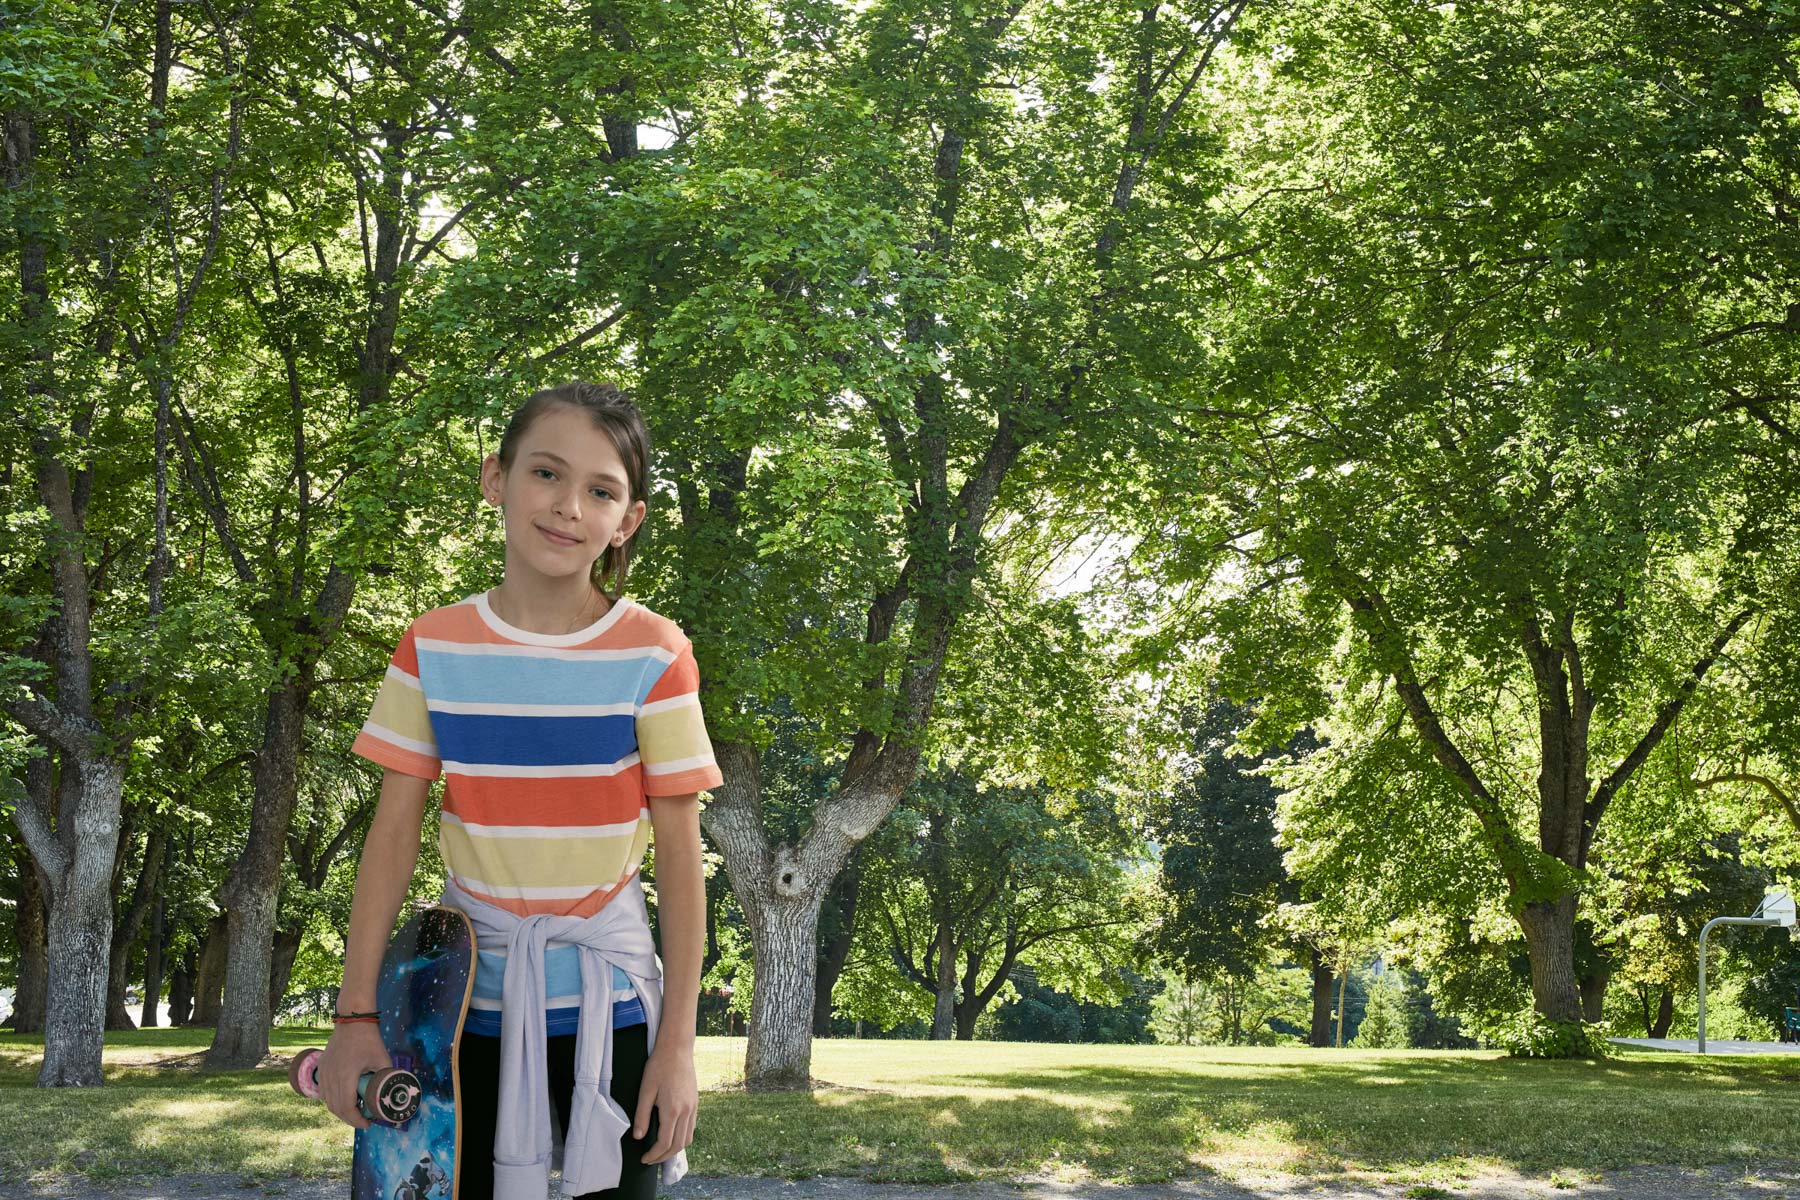 Little girl with skateboard in park